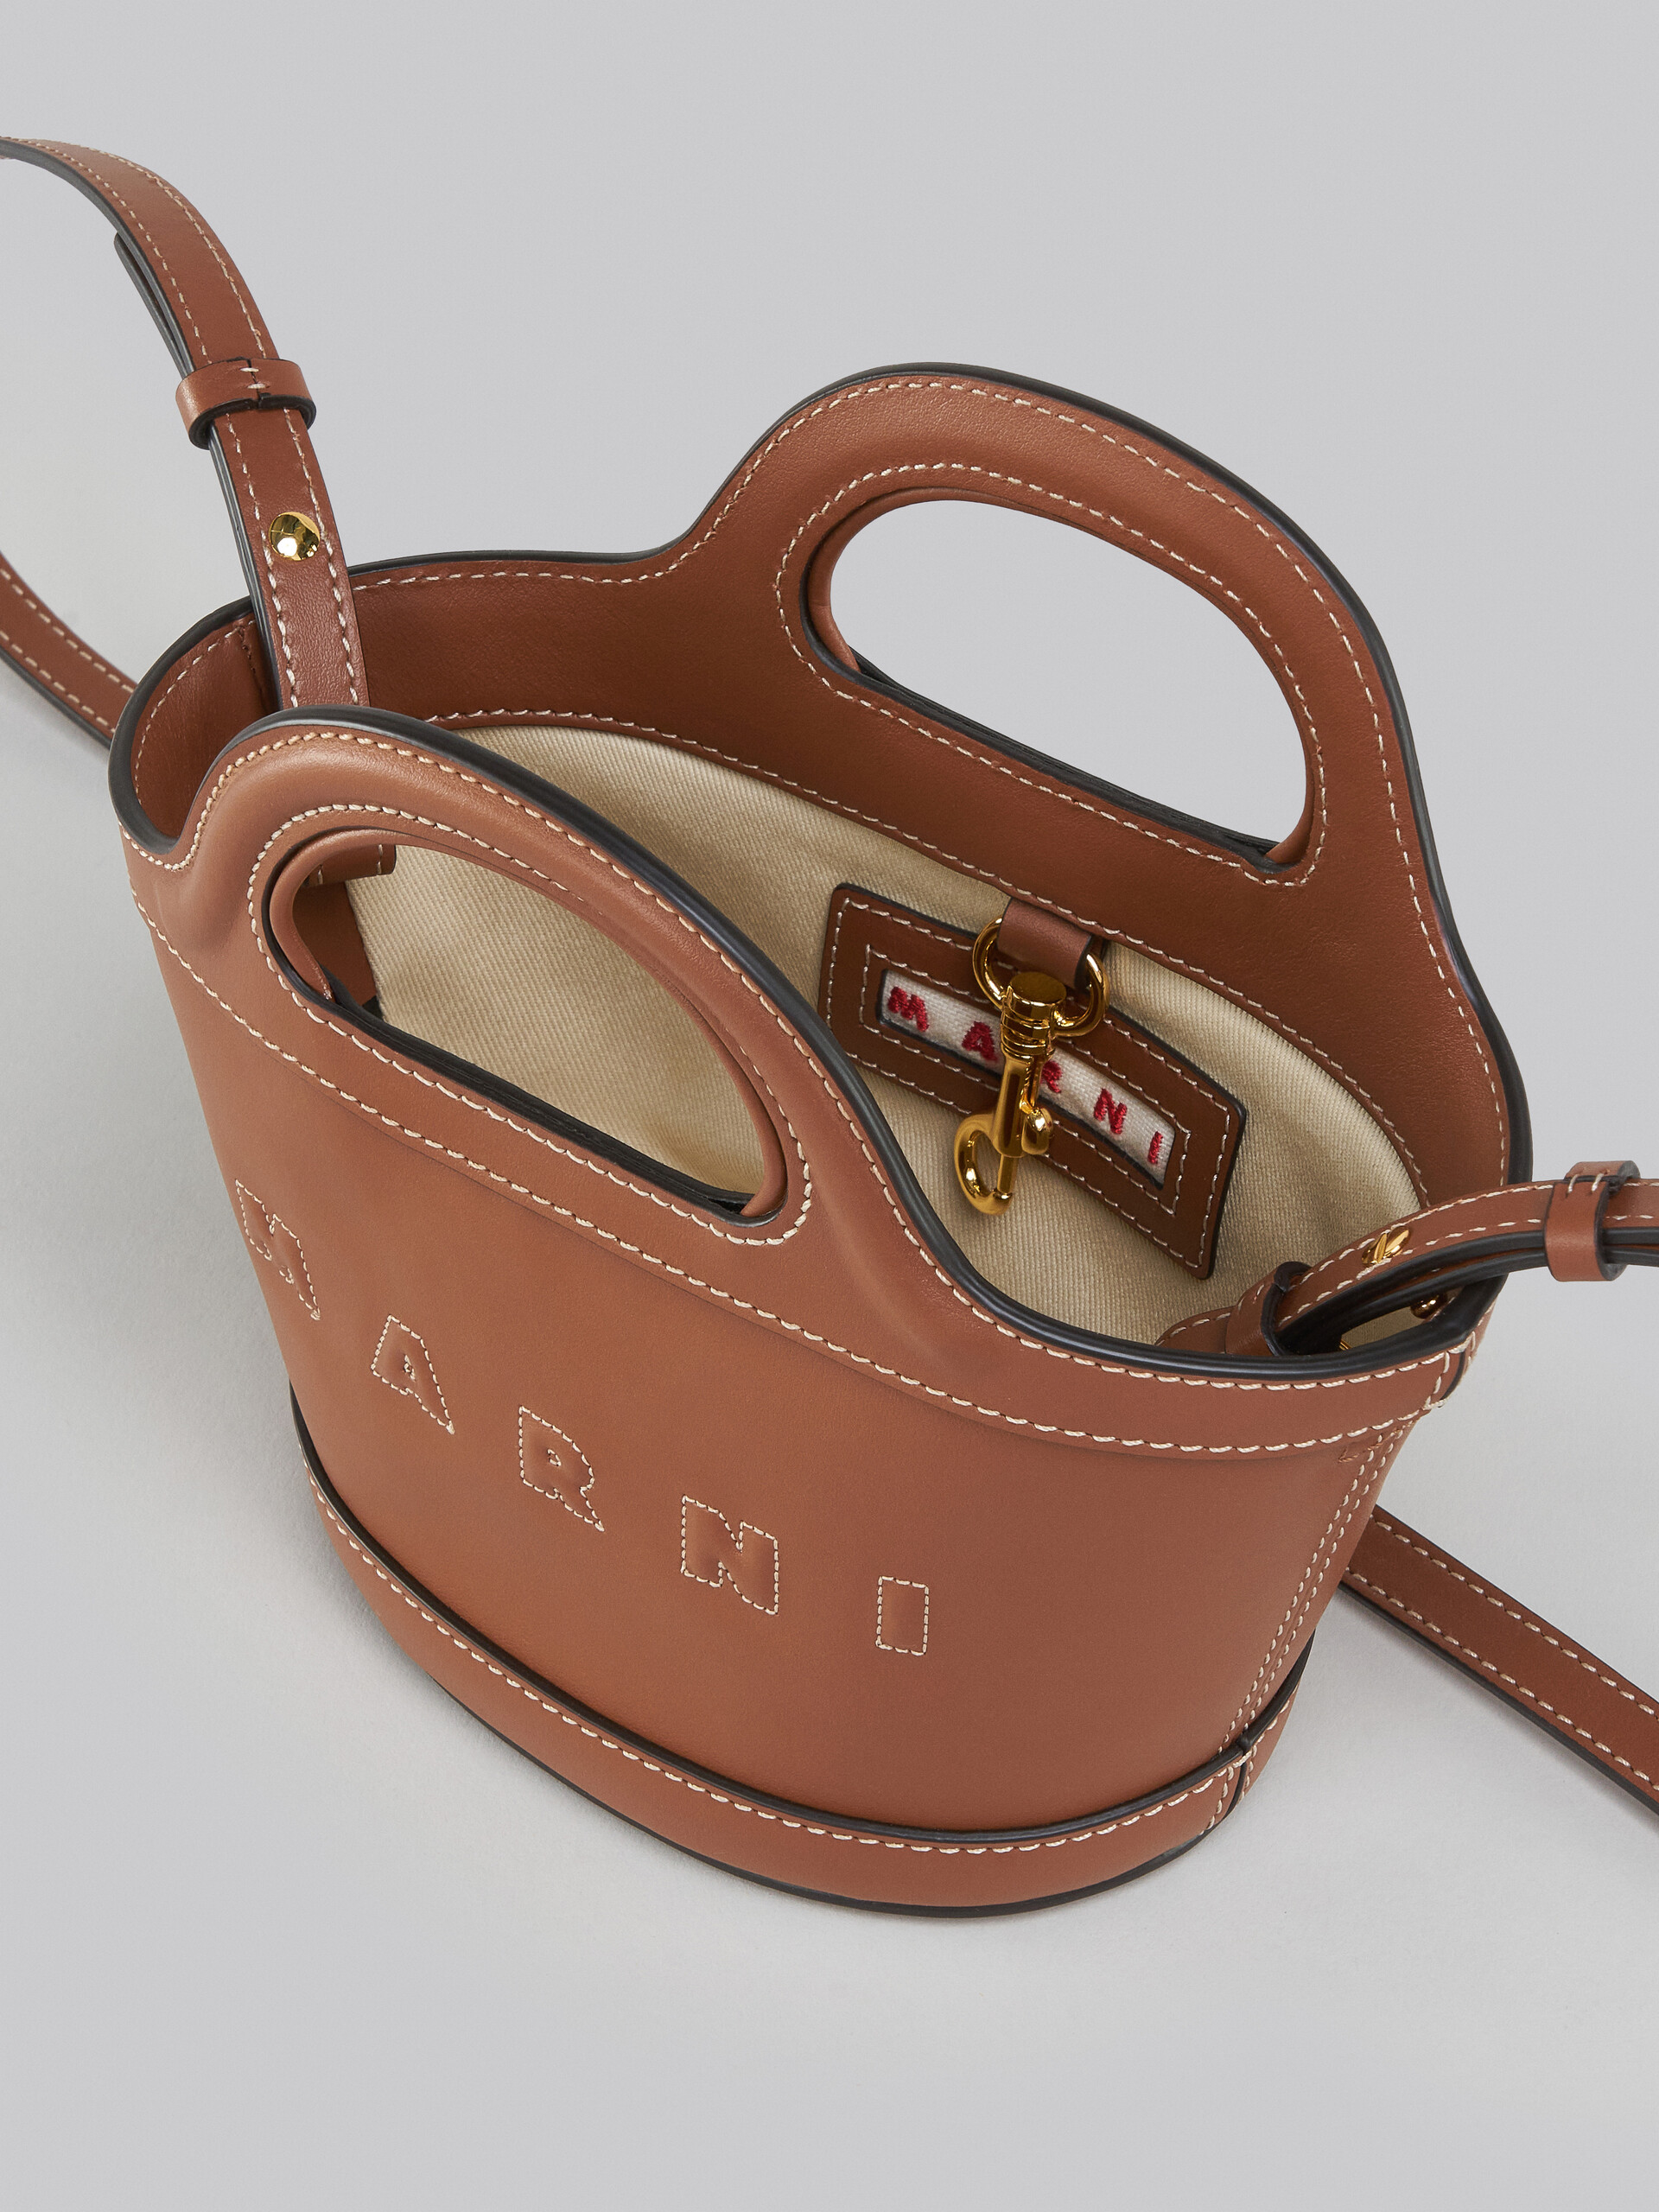 Tropicalia Micro Bag in brown leather - Handbag - Image 4